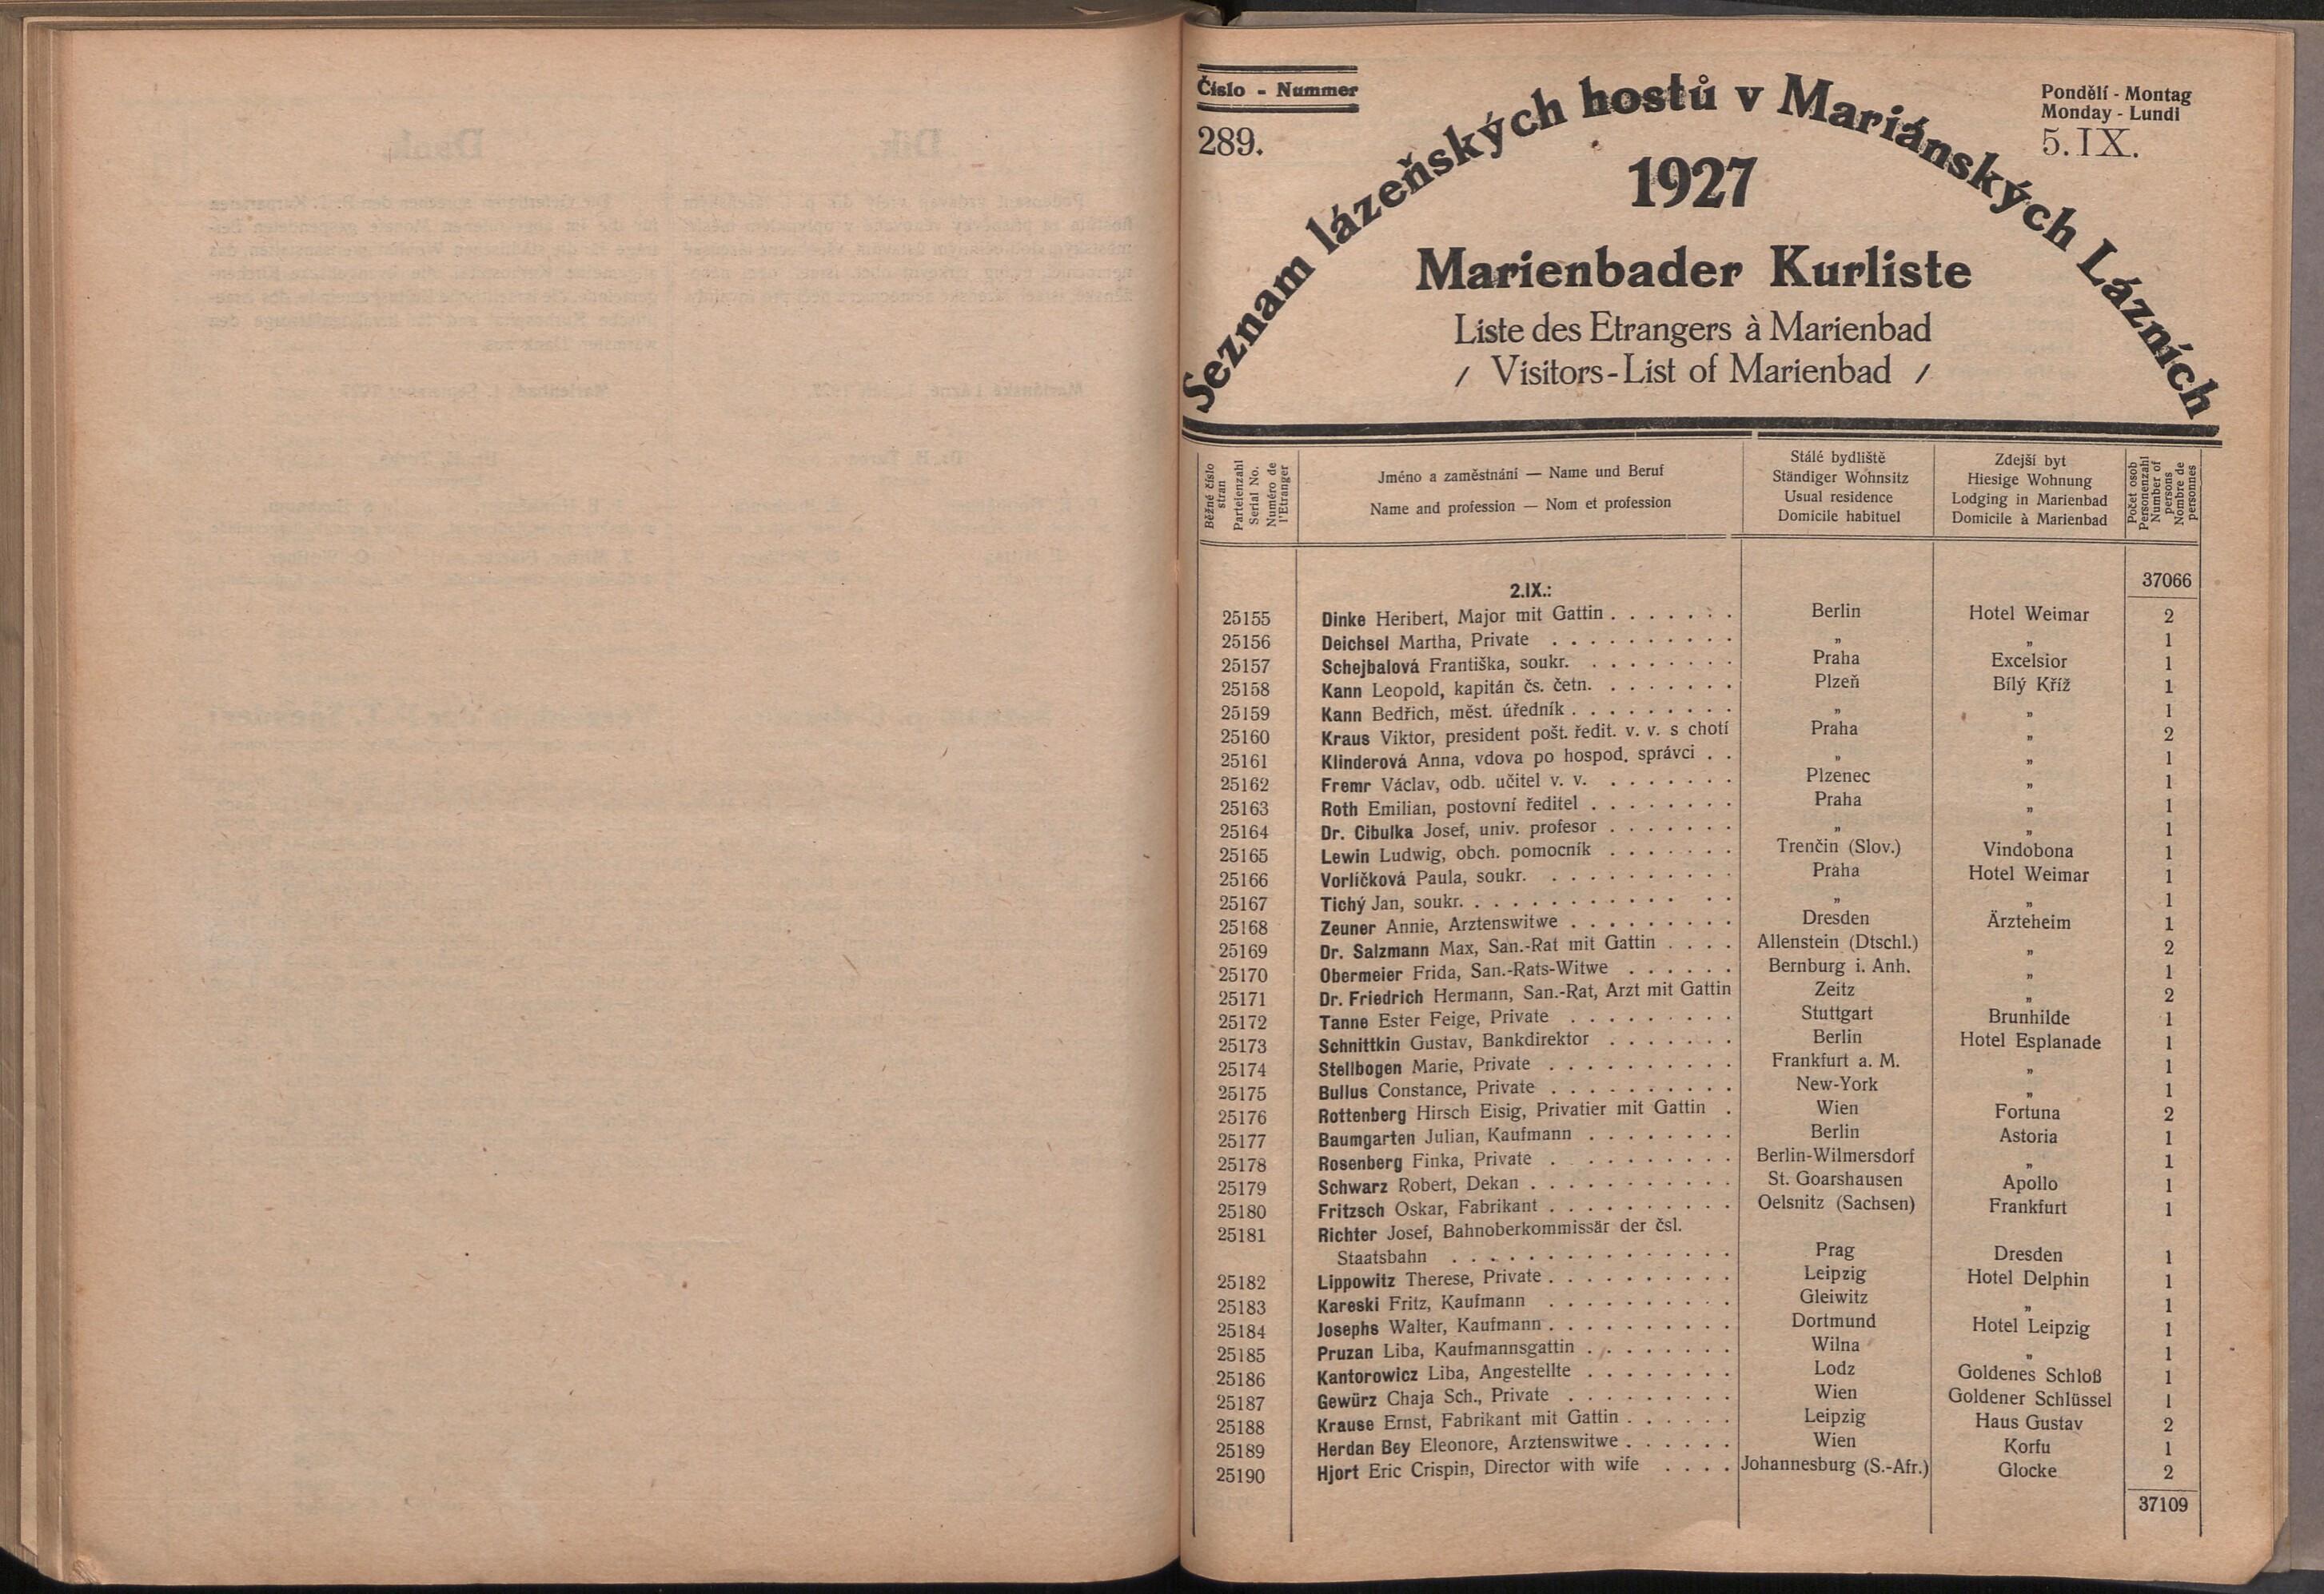 371. soap-ch_knihovna_marienbader-kurliste-1927_3710